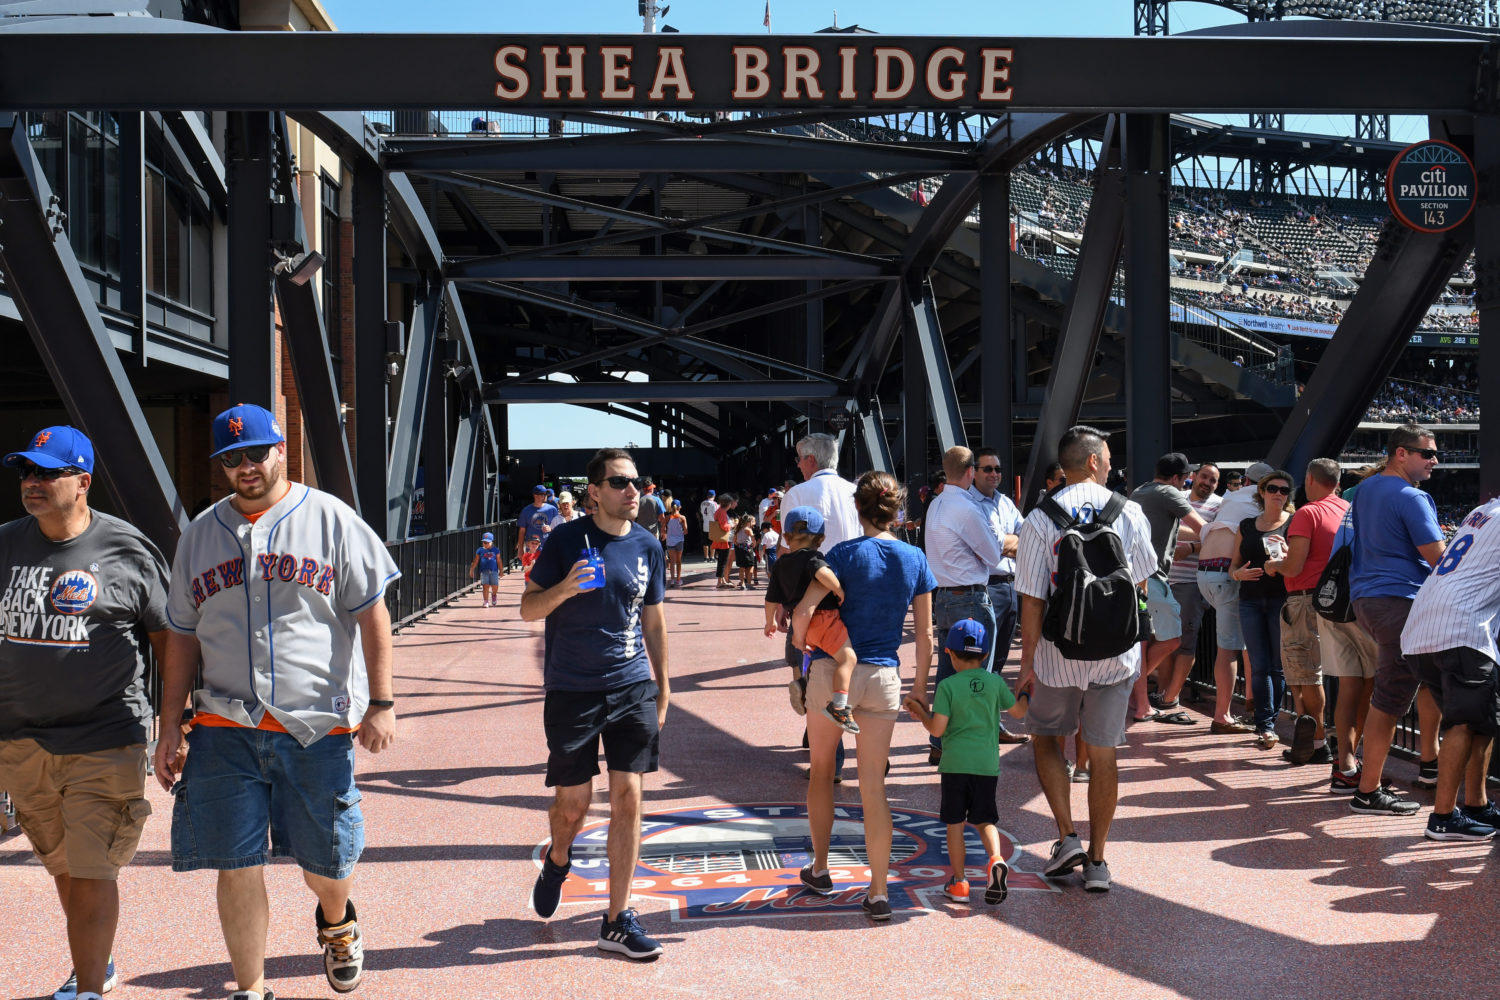 Photo of Shea Bridge in Citi Field with Fans Crossing